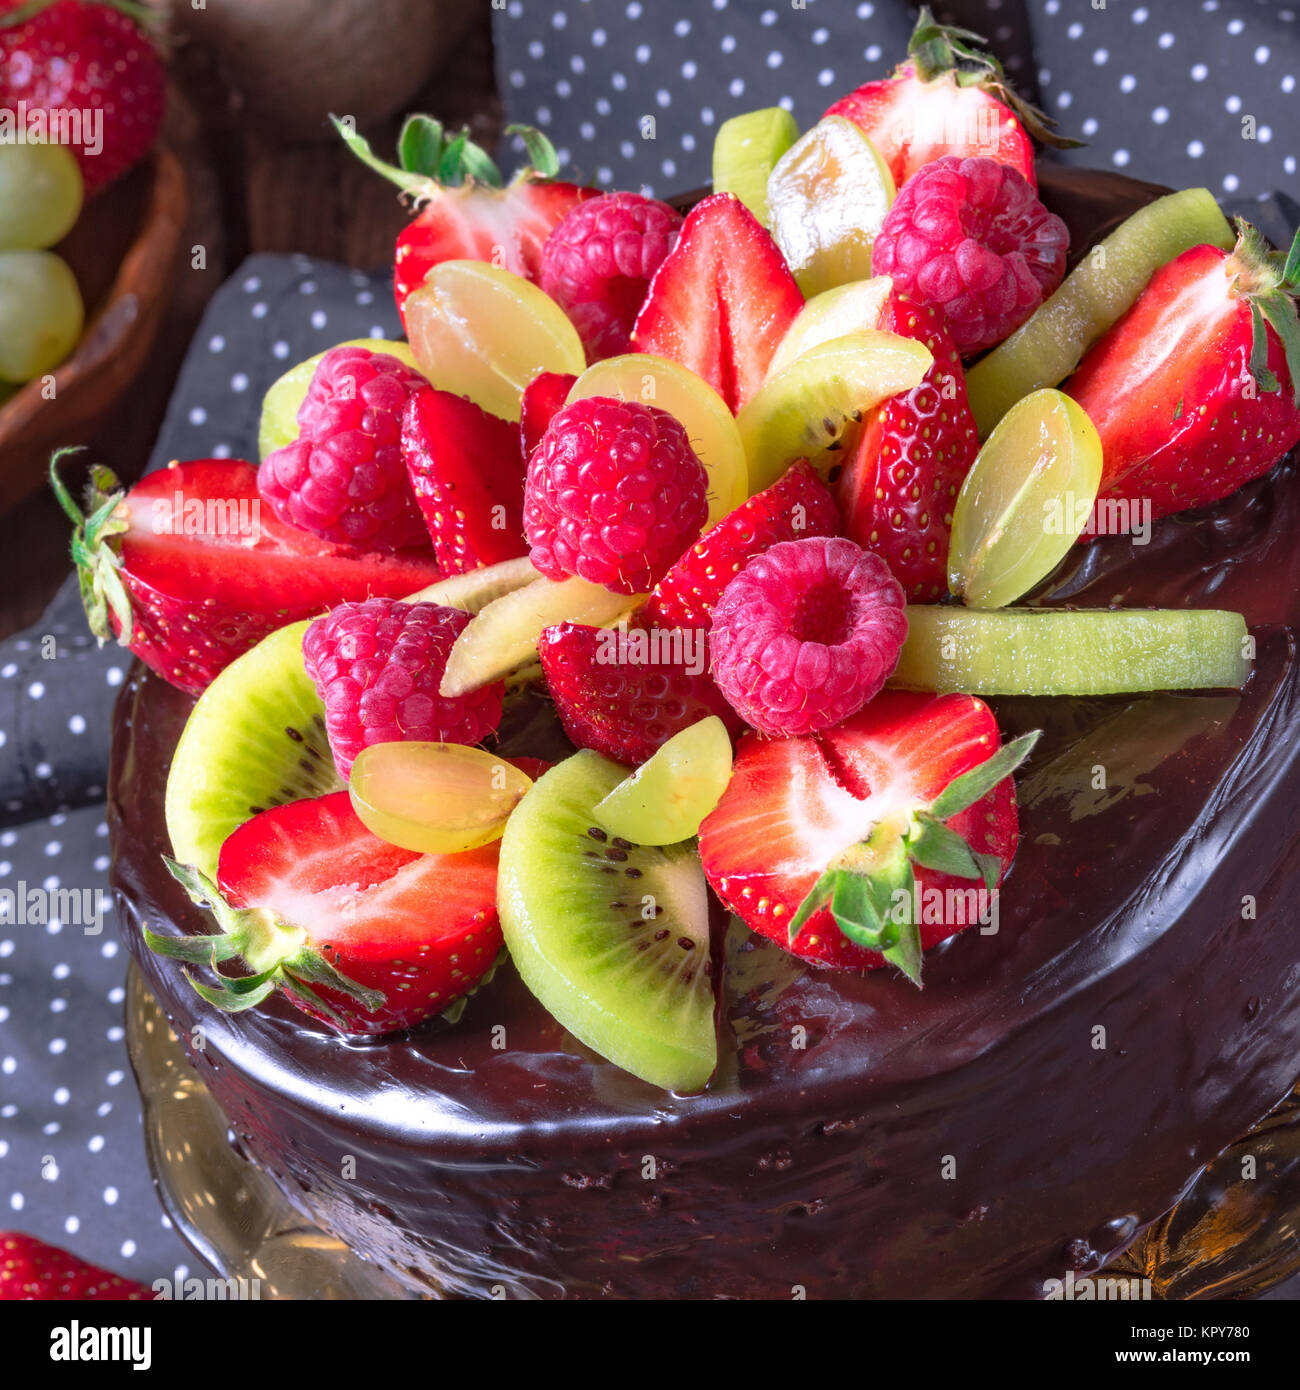 chocolate cheesecake with fruit Stock Photo